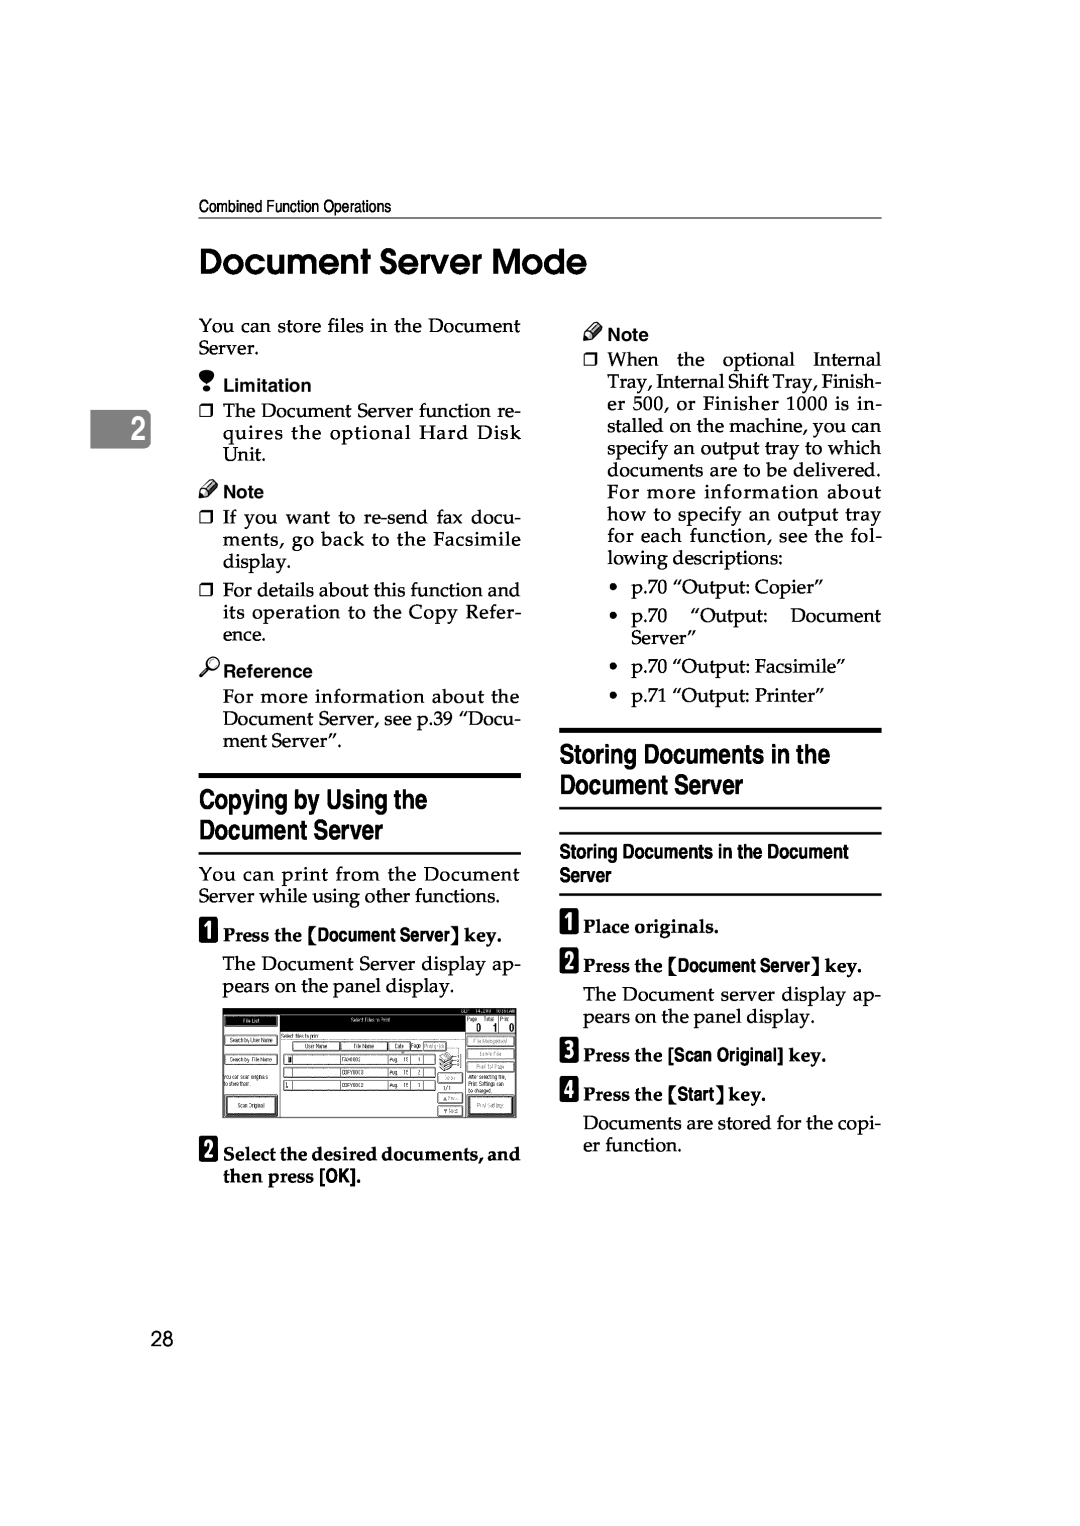 Lanier 5627 AG manual Document Server Mode, Copying by Using the Document Server, Storing Documents in the Document Server 